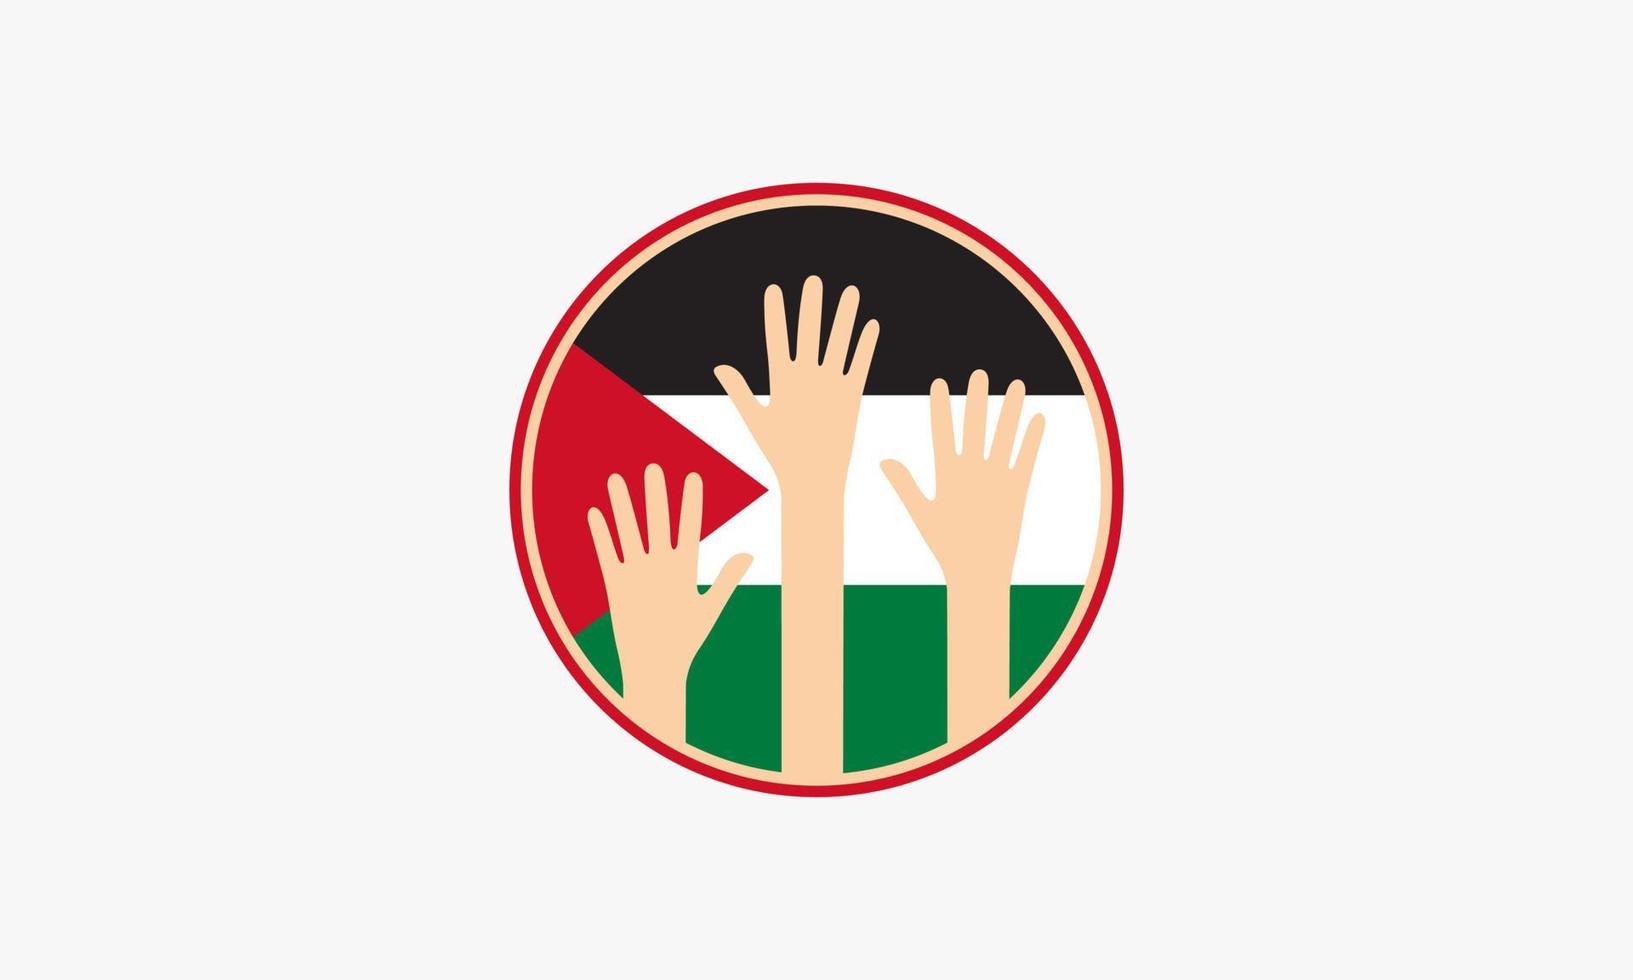 Palestina vlag cirkel handen verhogen vector op witte achtergrond.